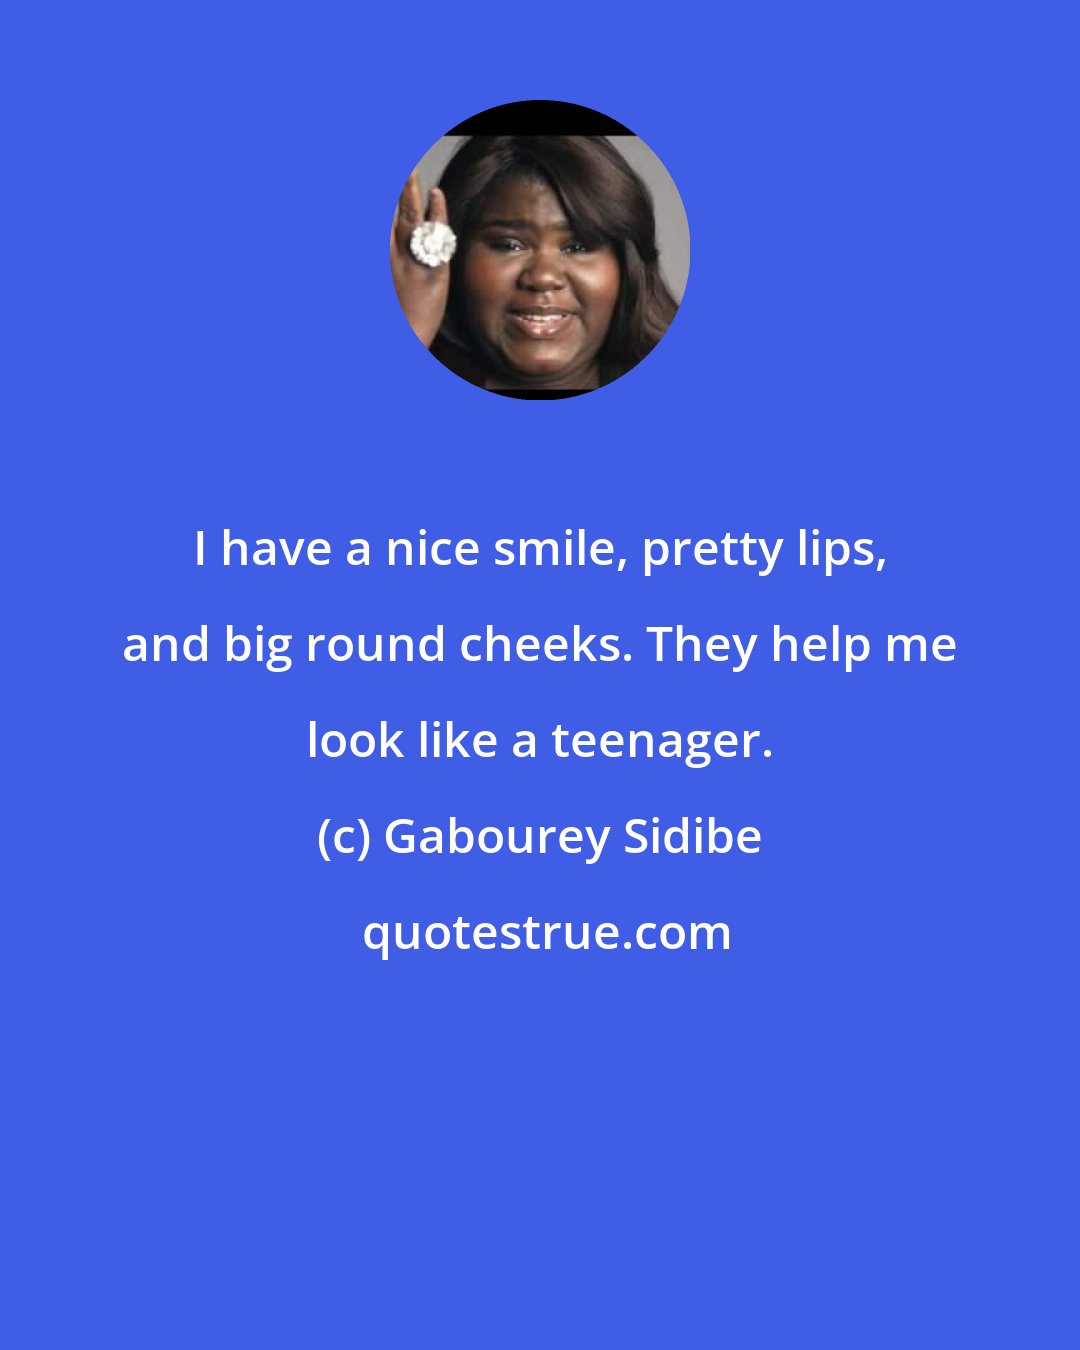 Gabourey Sidibe: I have a nice smile, pretty lips, and big round cheeks. They help me look like a teenager.